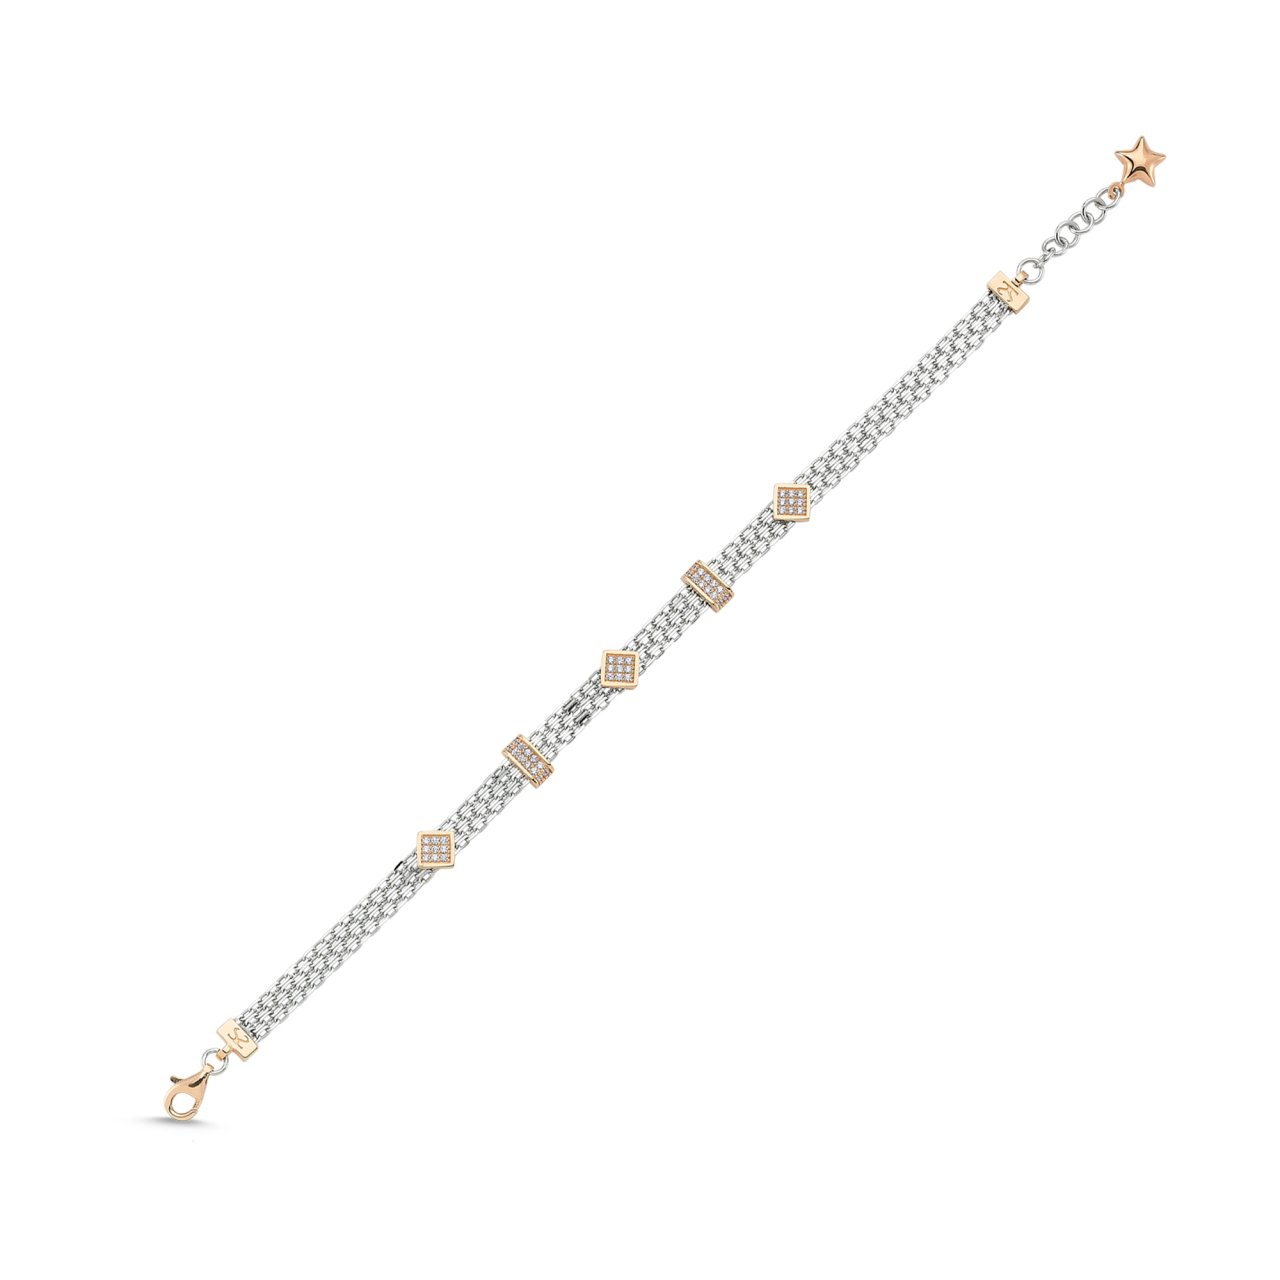 TSBL 2090 Gold Bracelet